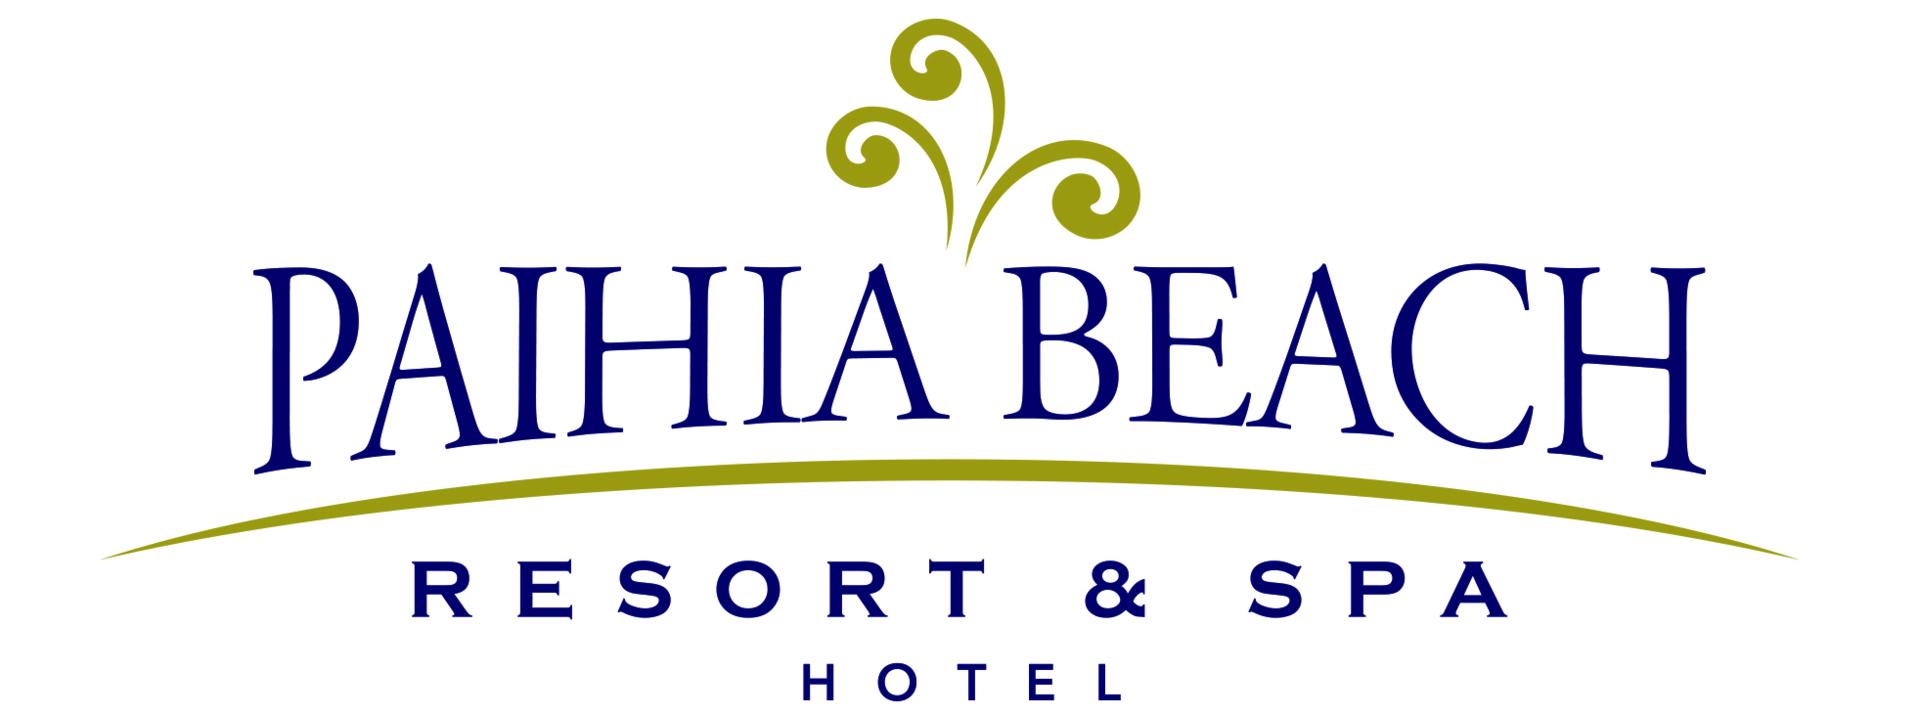 pb-resort-spa-logo-cmyk.jpg